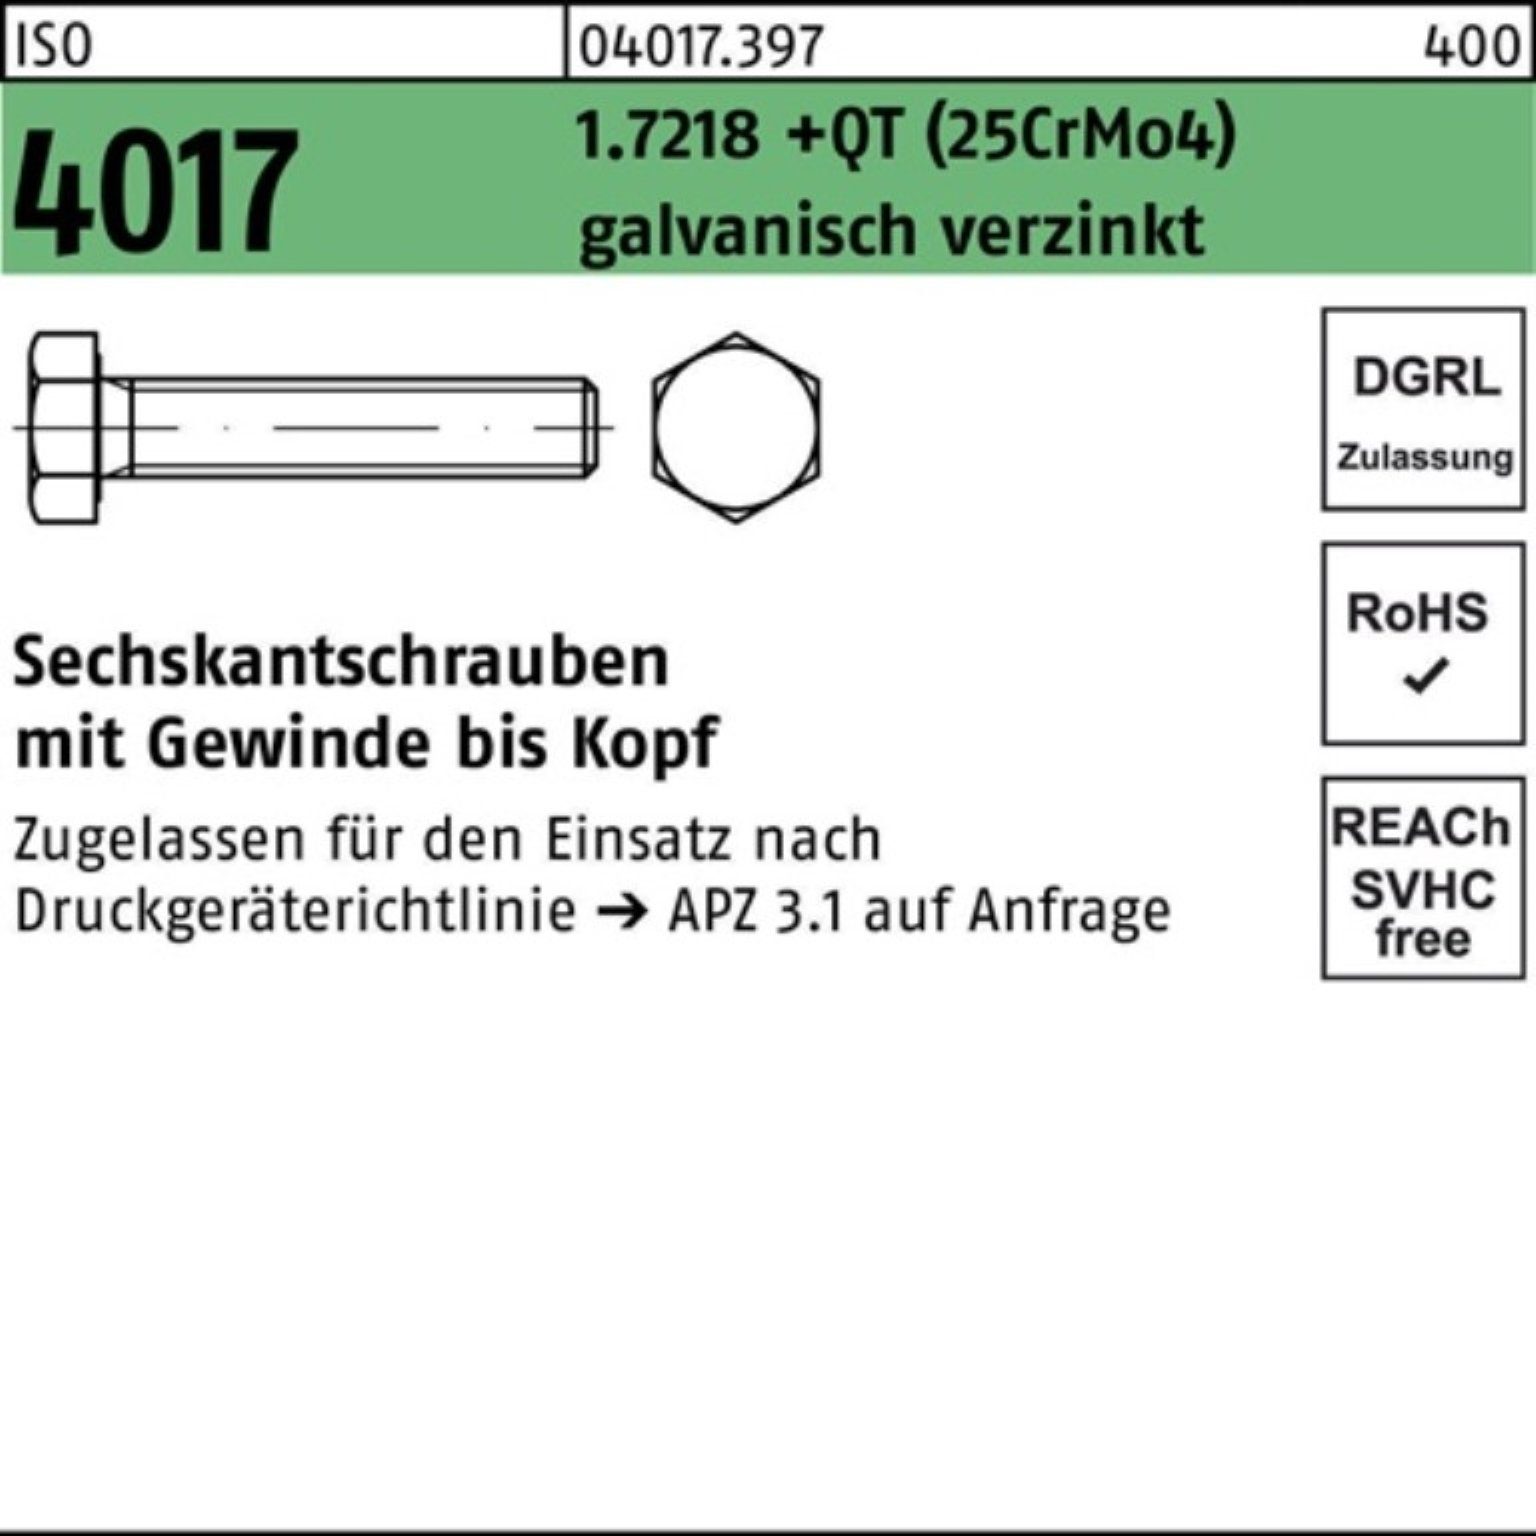 +QT Sechskantschraube 4017 VG (25CrMo4) Sechskantschraube Bufab ISO Pack 1.7218 100er M30x110